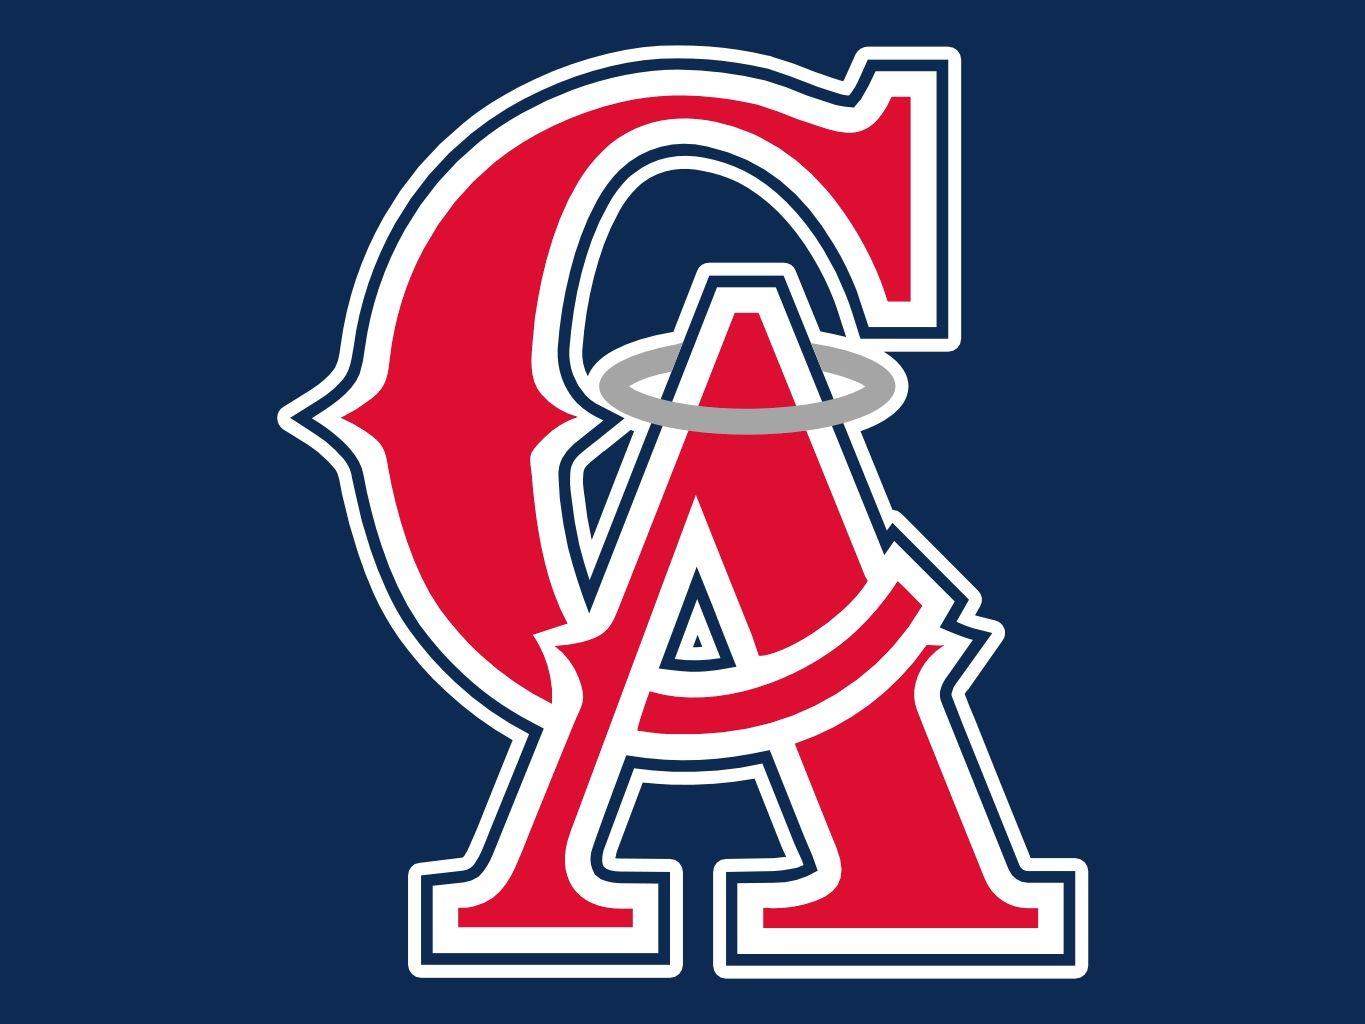 California Angels Logo - California Angels | Pro Sports Teams Wiki | FANDOM powered by Wikia